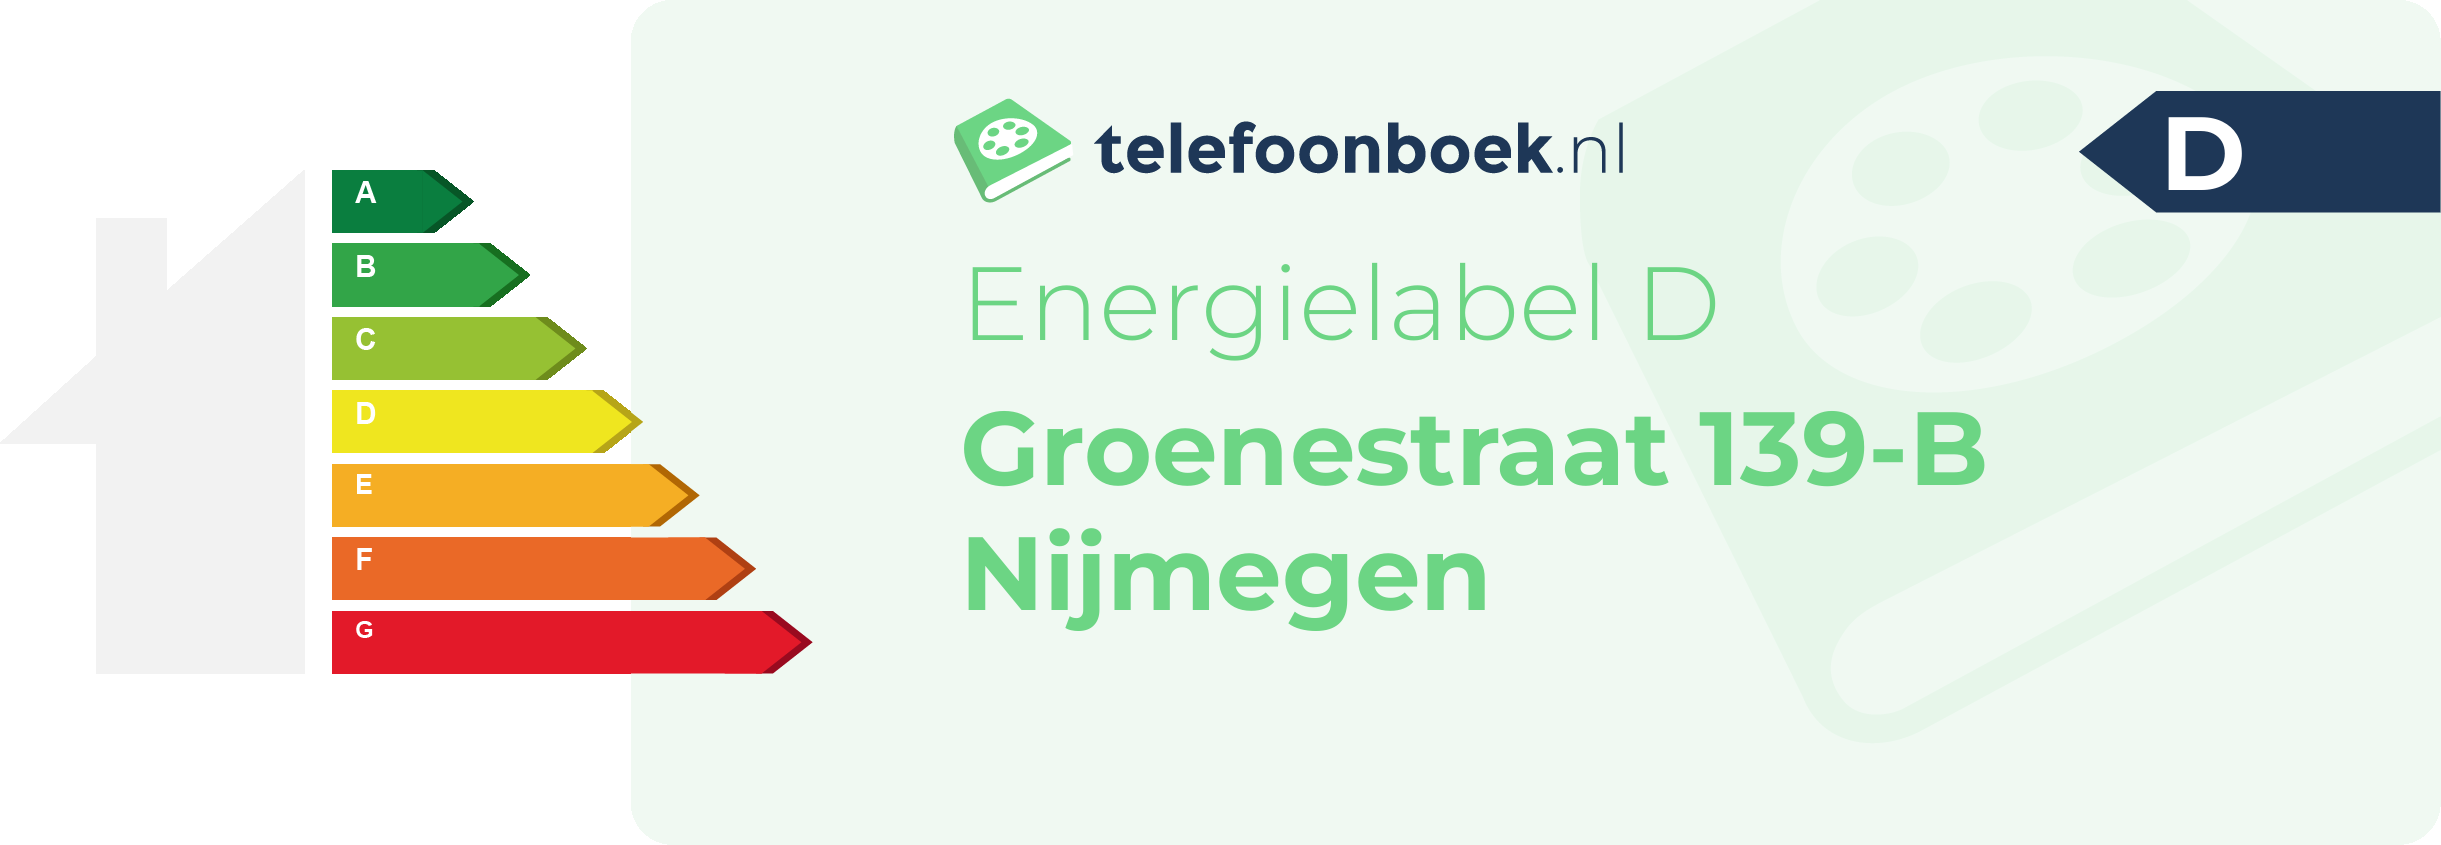 Energielabel Groenestraat 139-B Nijmegen